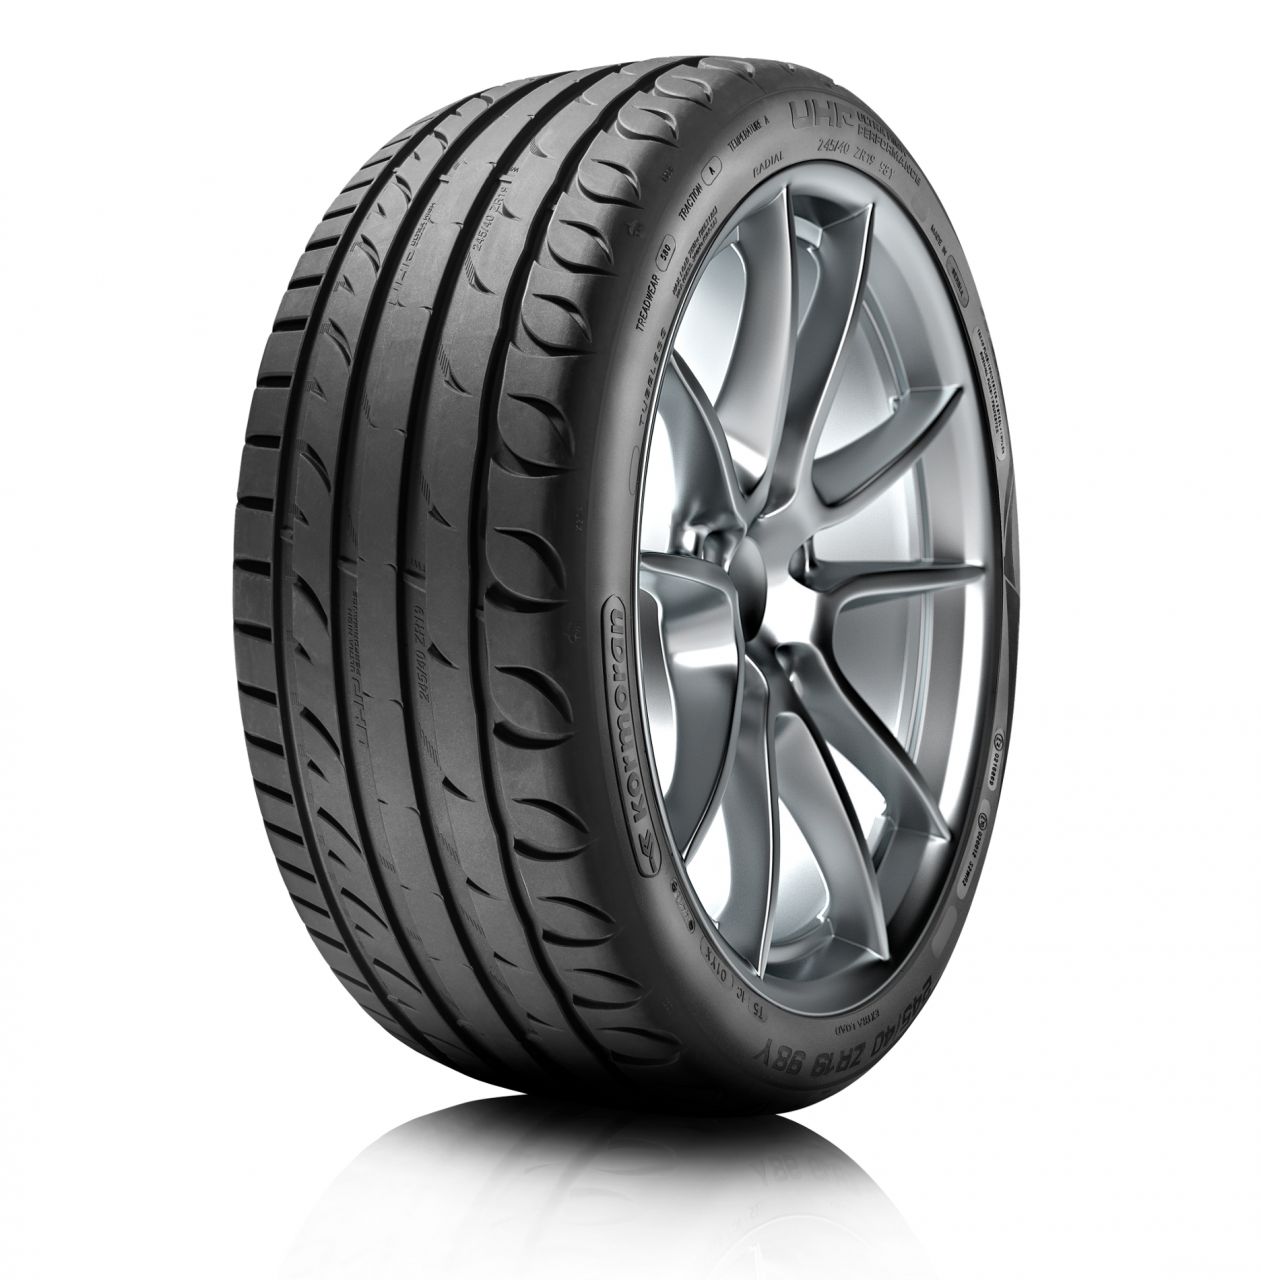 215/55R18 summer tyres